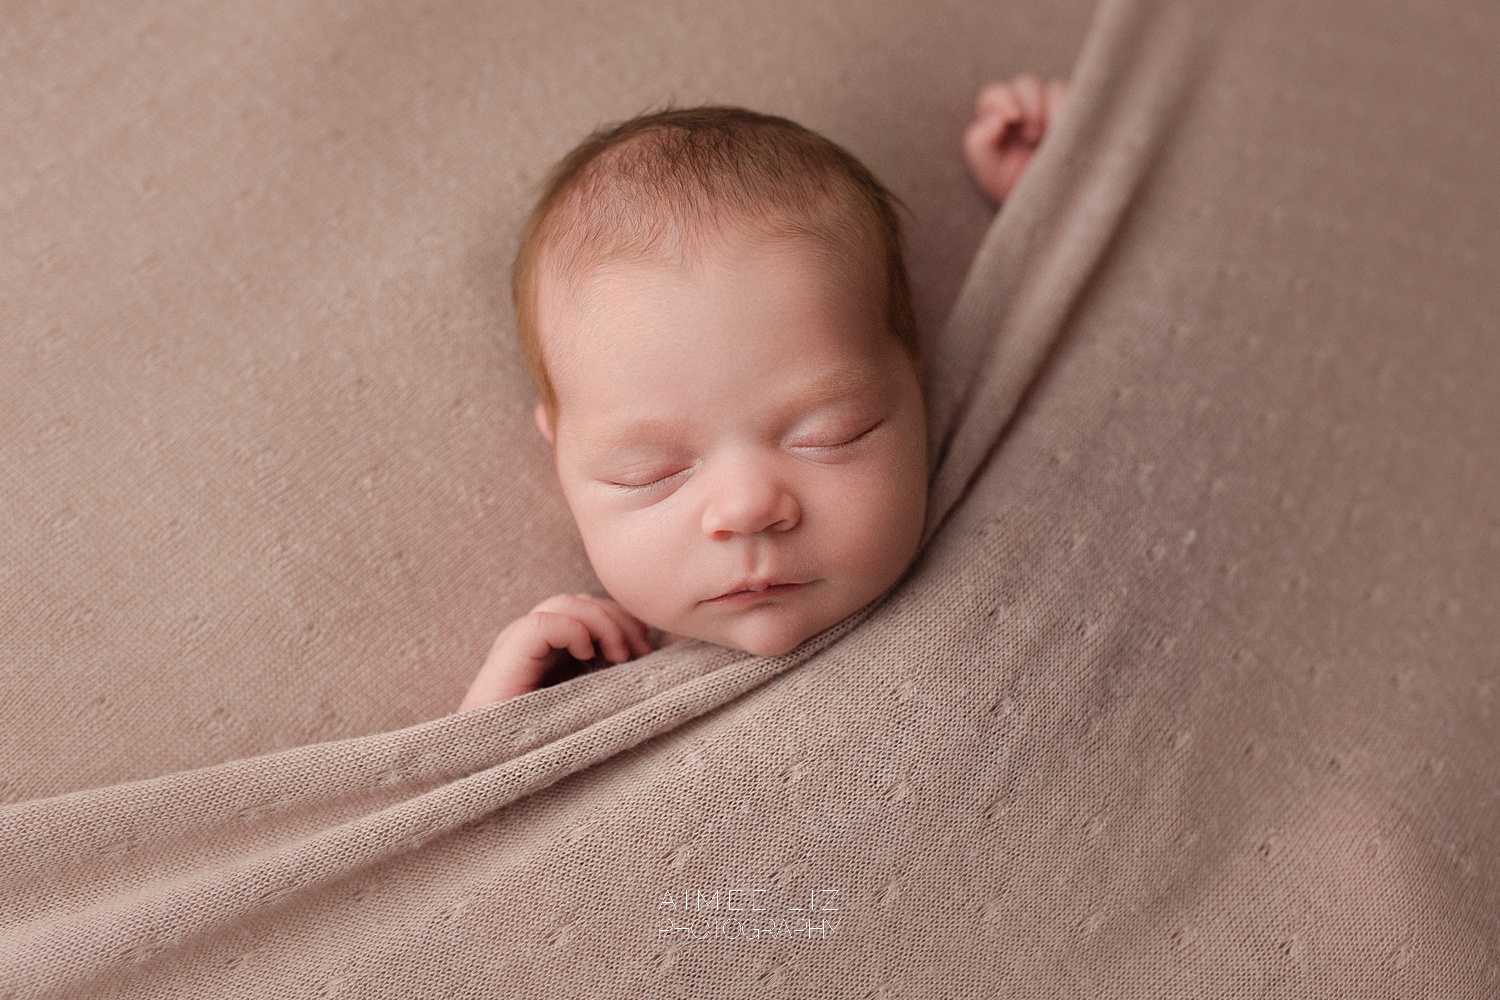 central massachusetts newborn photographer